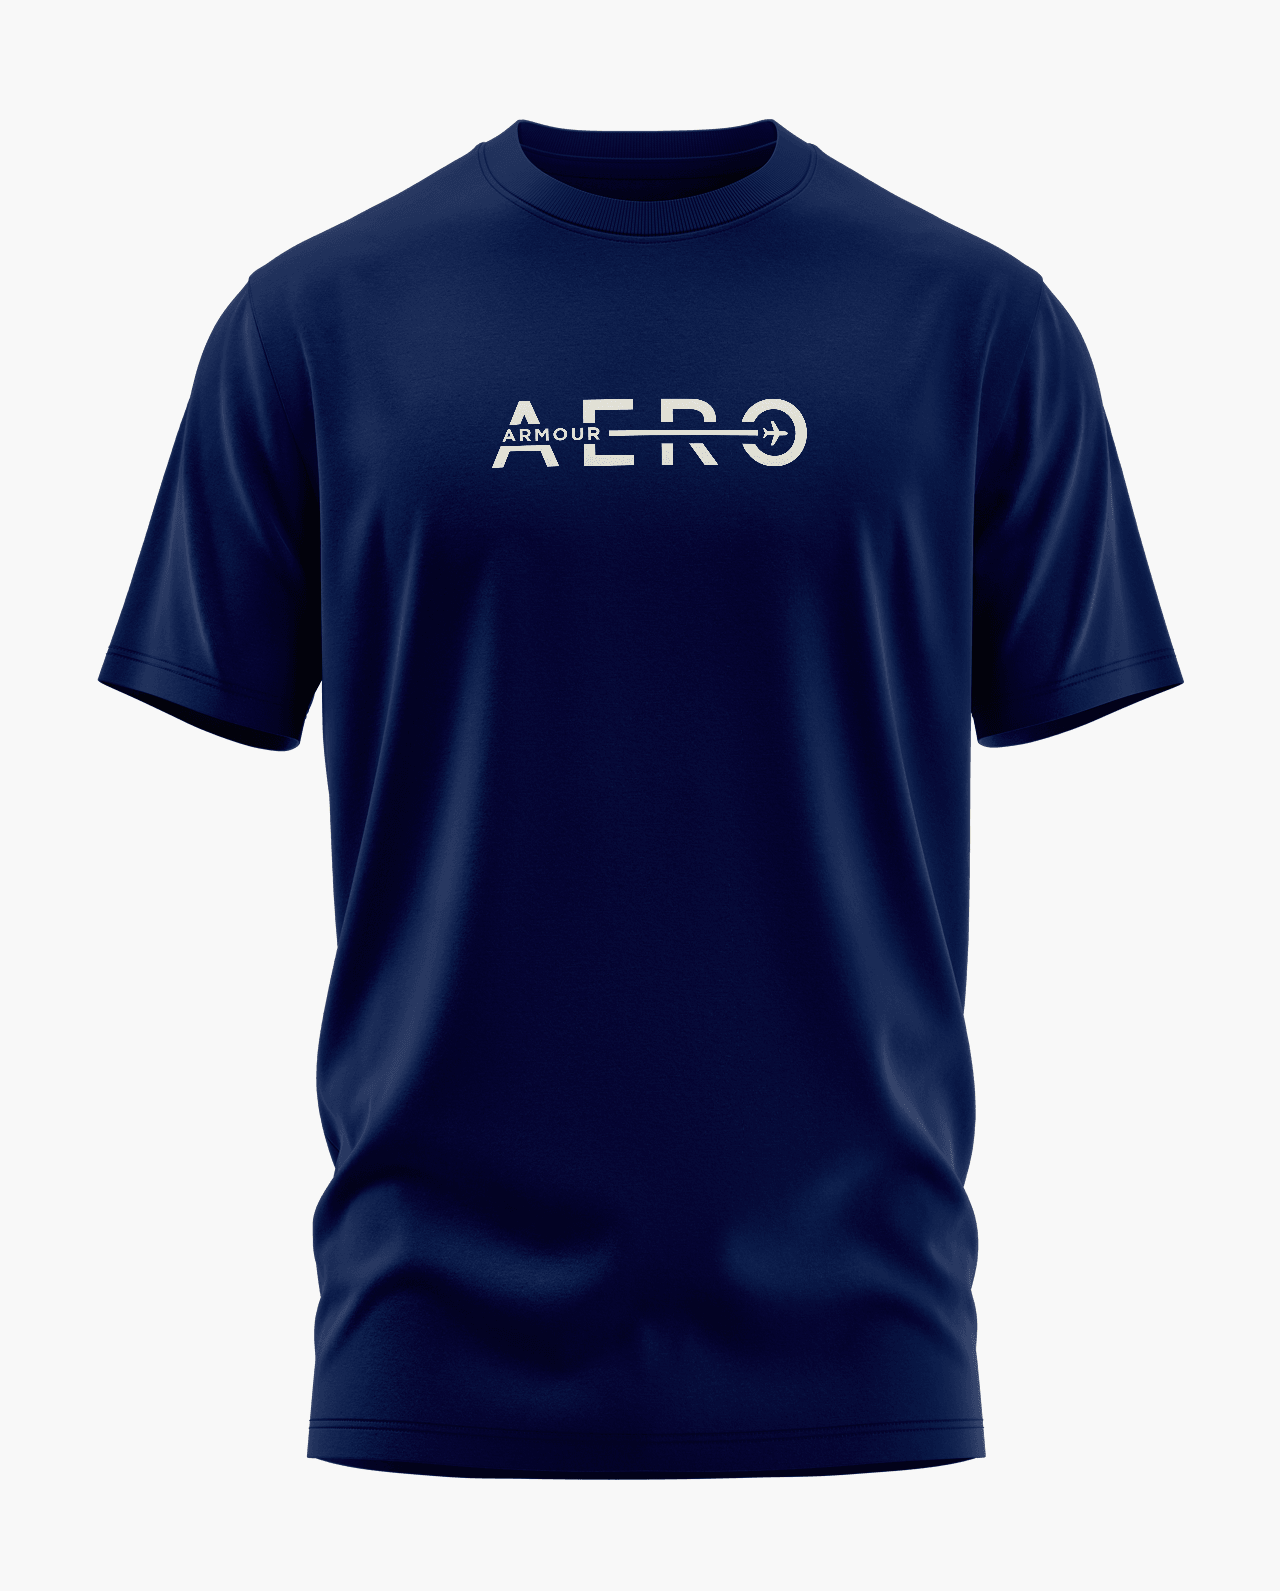 Retro Aero T-Shirt - Aero Armour